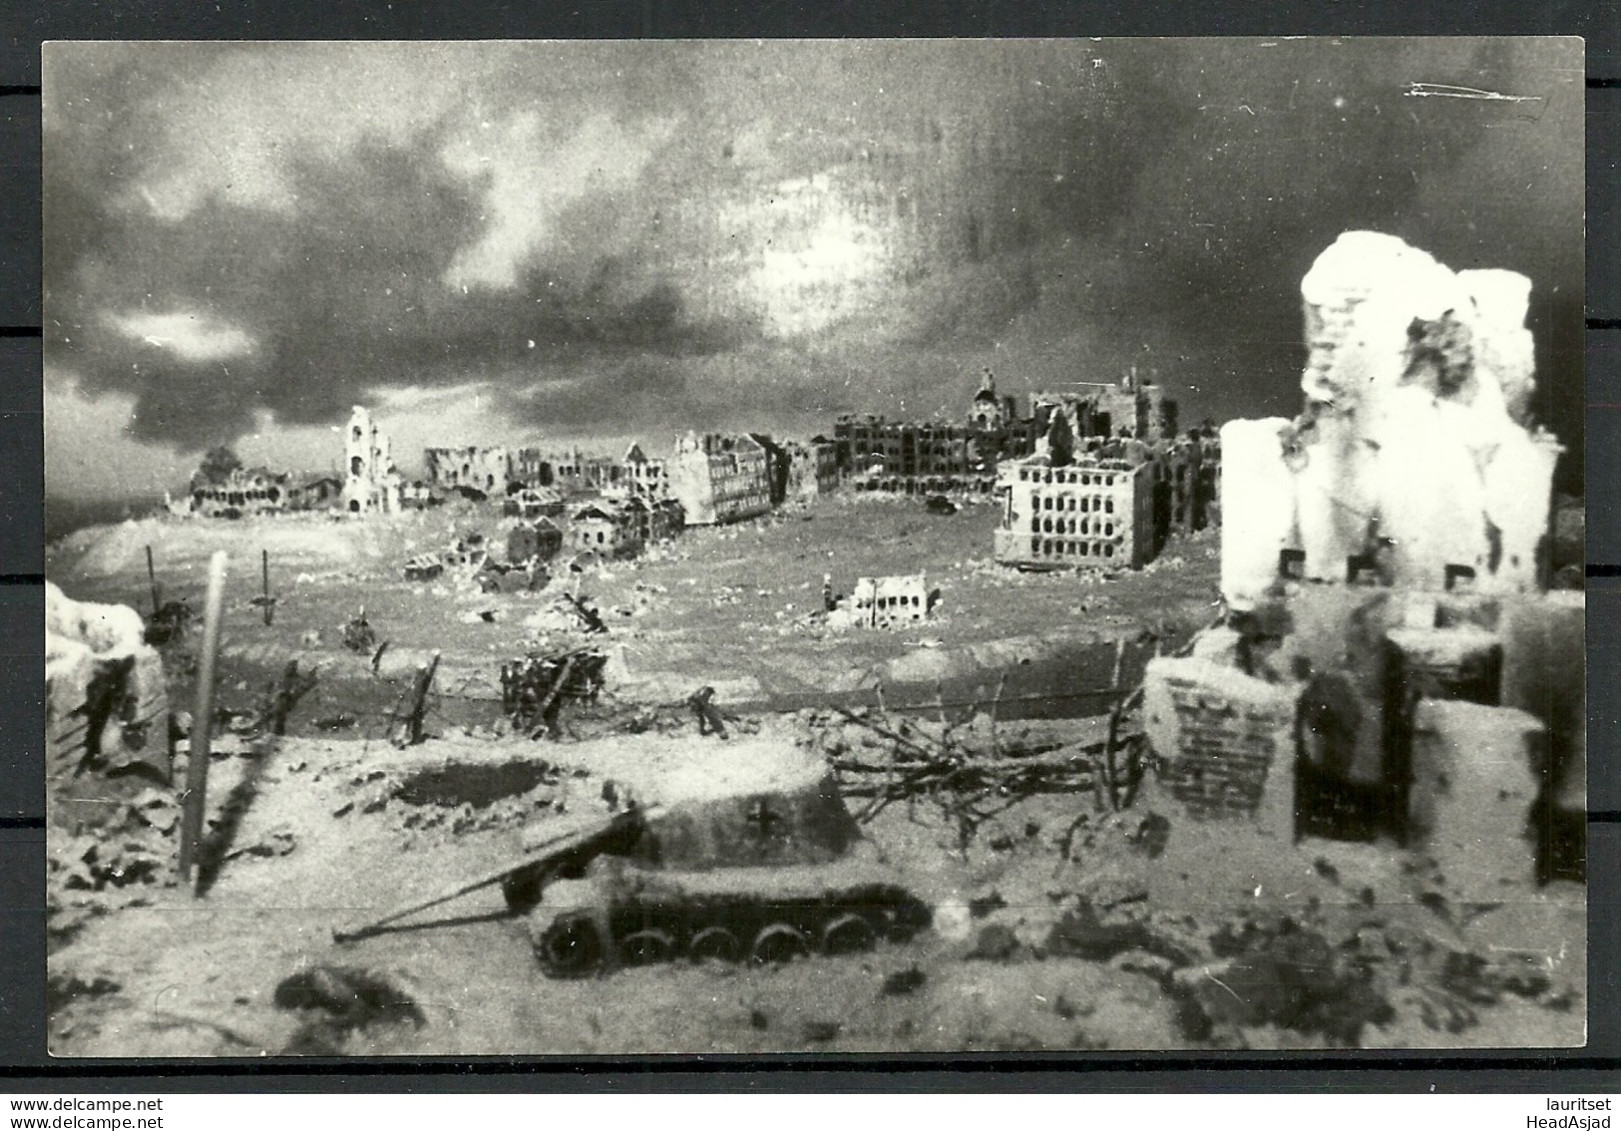 RUSSIA Russland Old Original Photofrapf 1943 WW II Volgograd ? Nach Der Schlacht The City After The Battle Tanks Etc. - War, Military